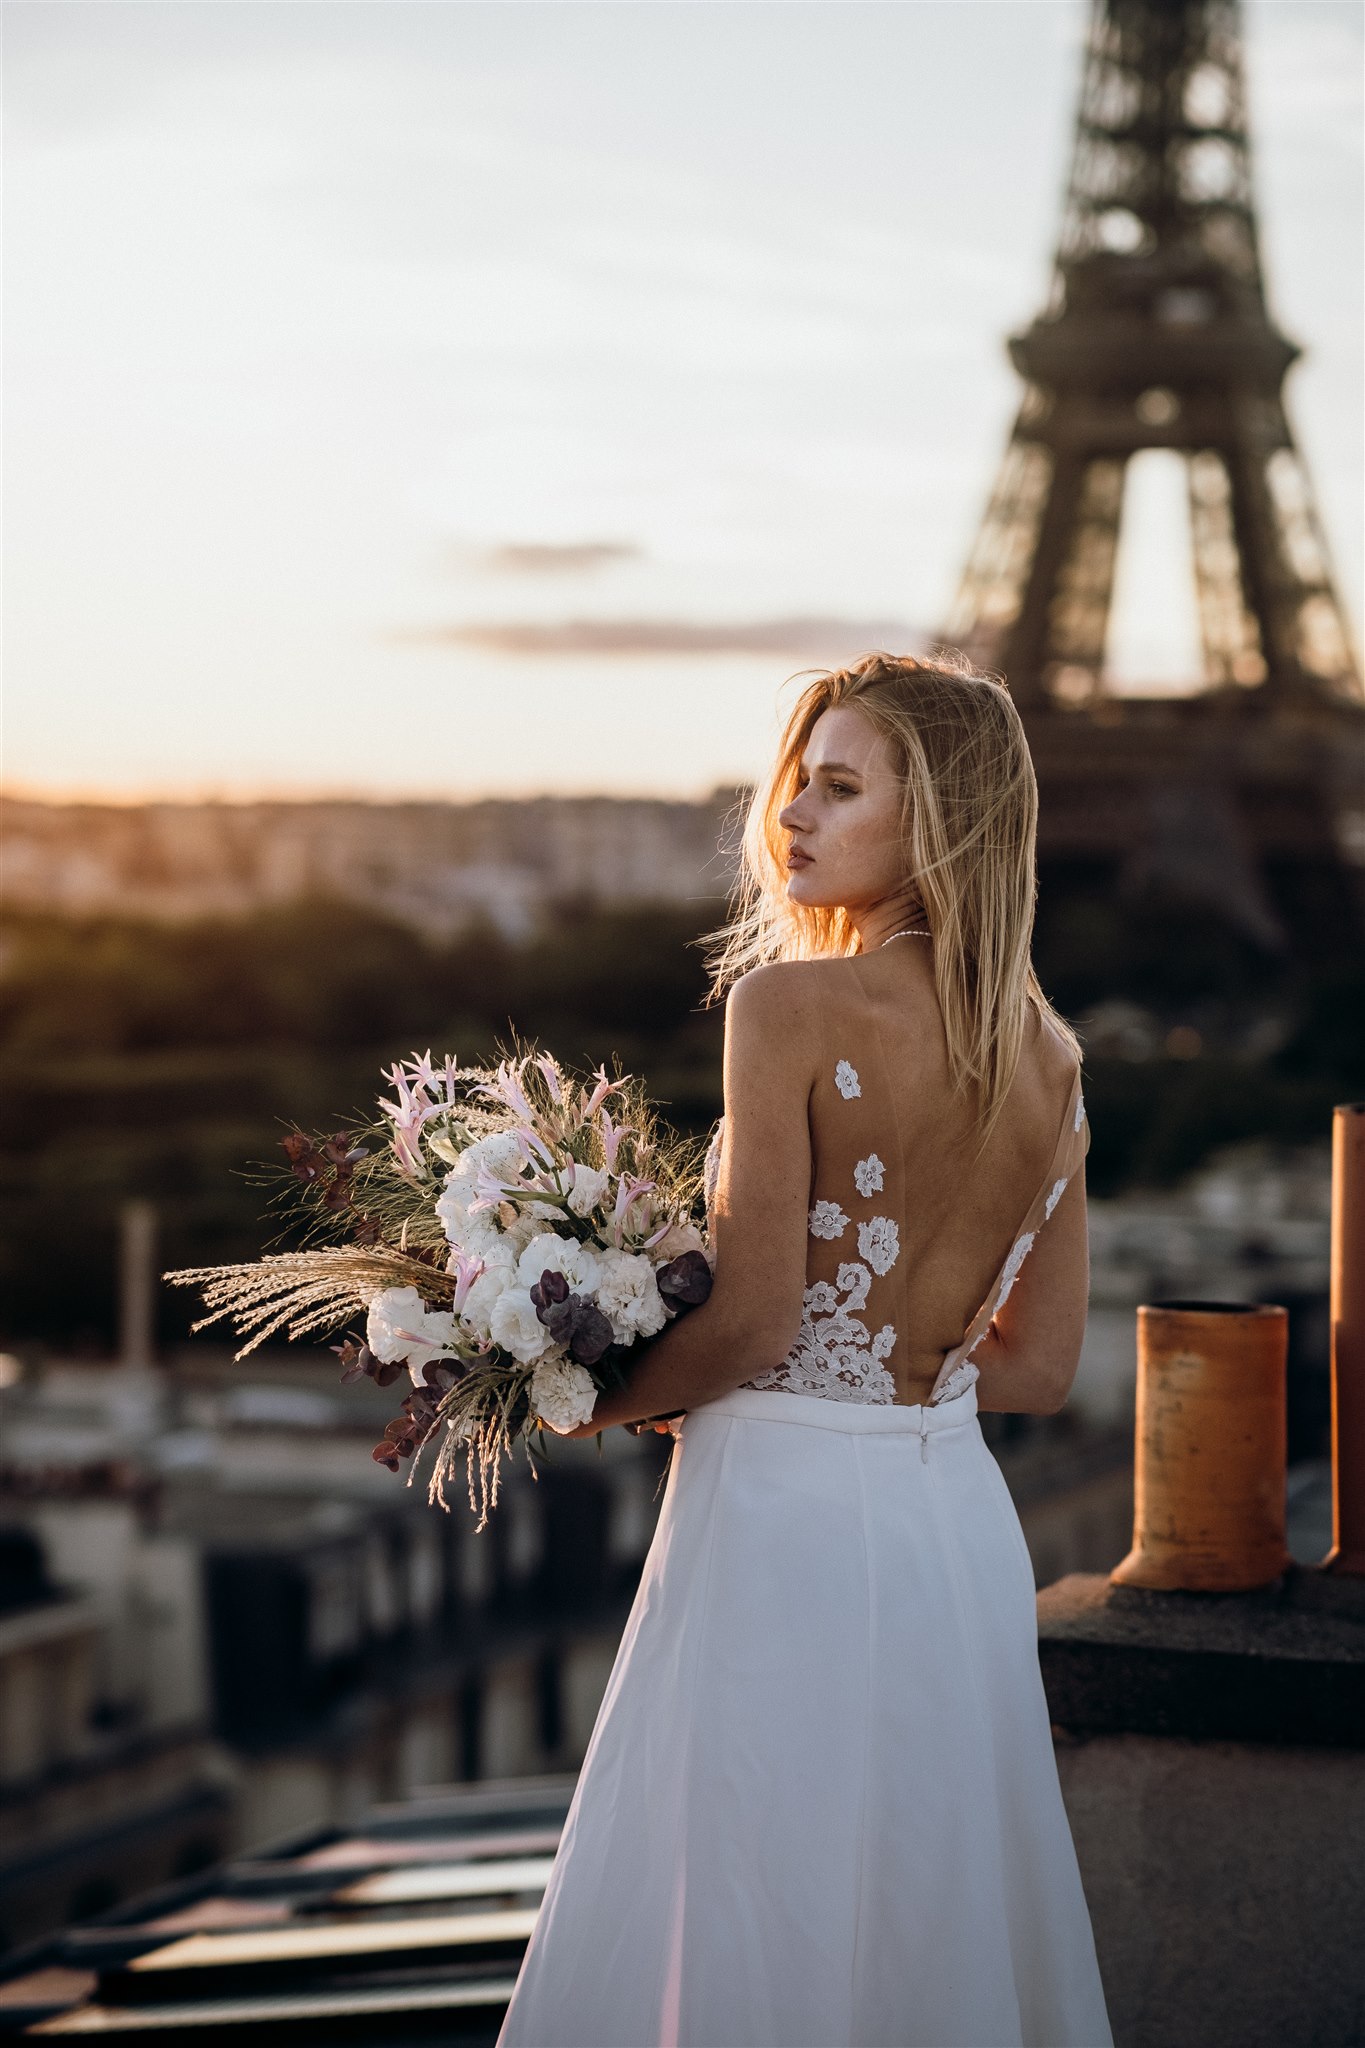 golden hour-inspired wedding bouquet